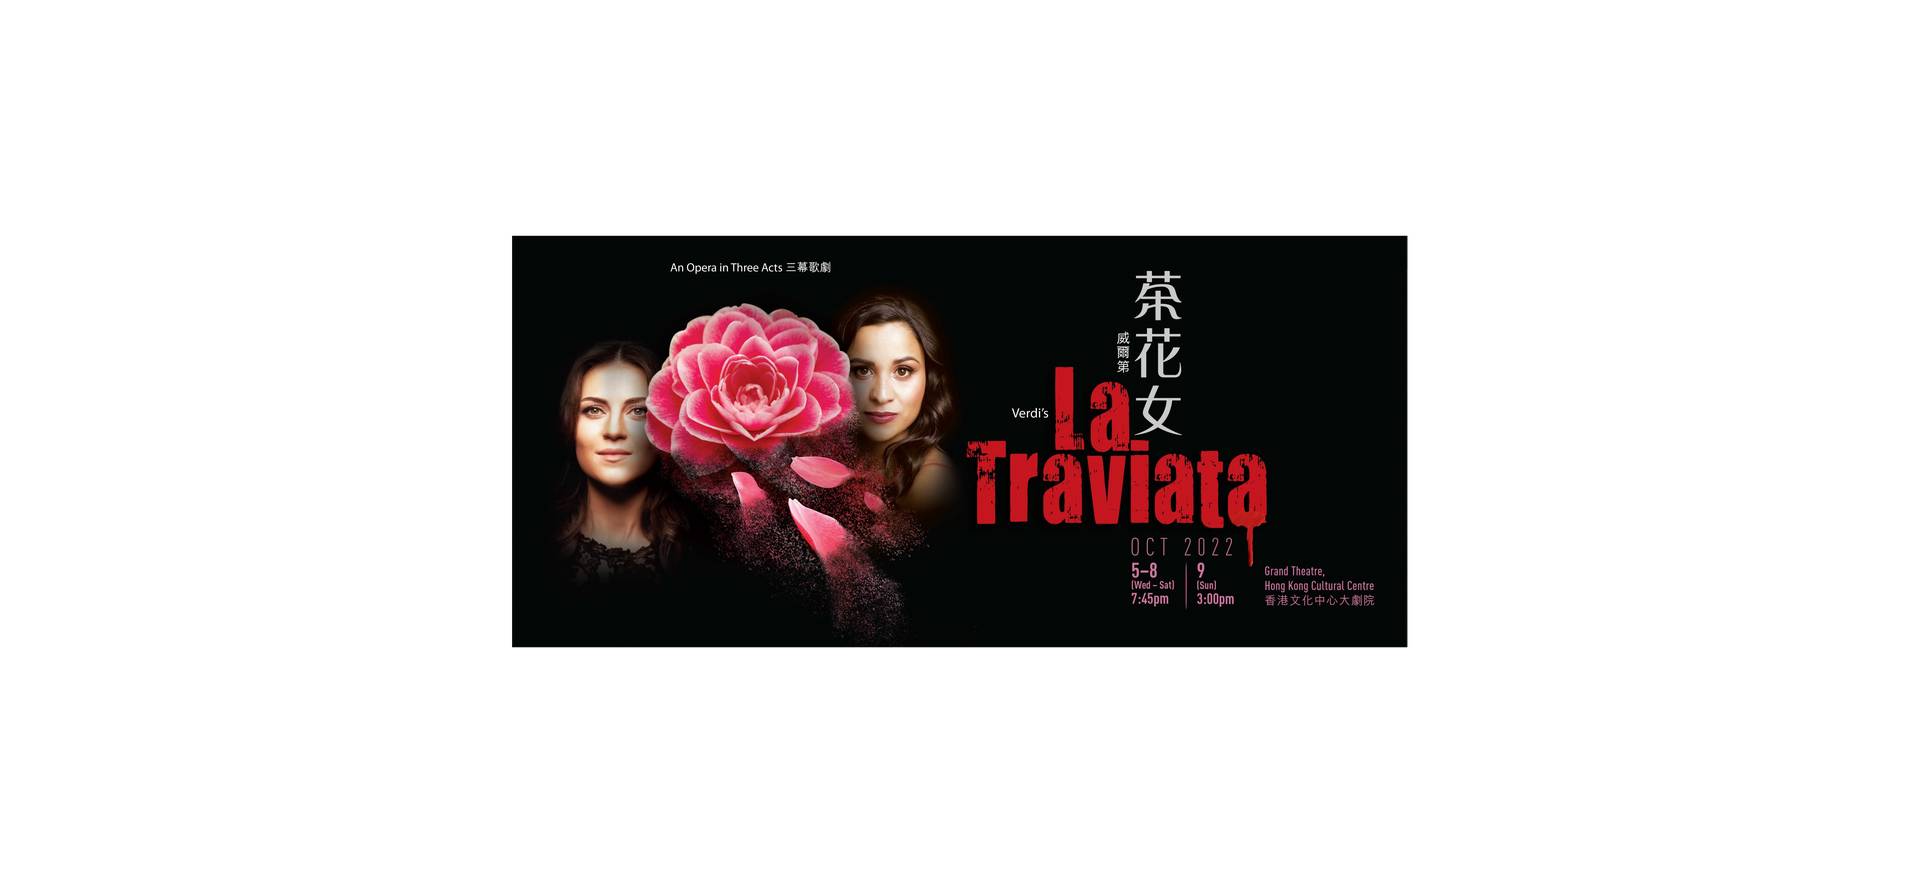 thumbnails Tickets to Verdi's La Triavata by Opera Hong Kong 8 Oct, 745PM